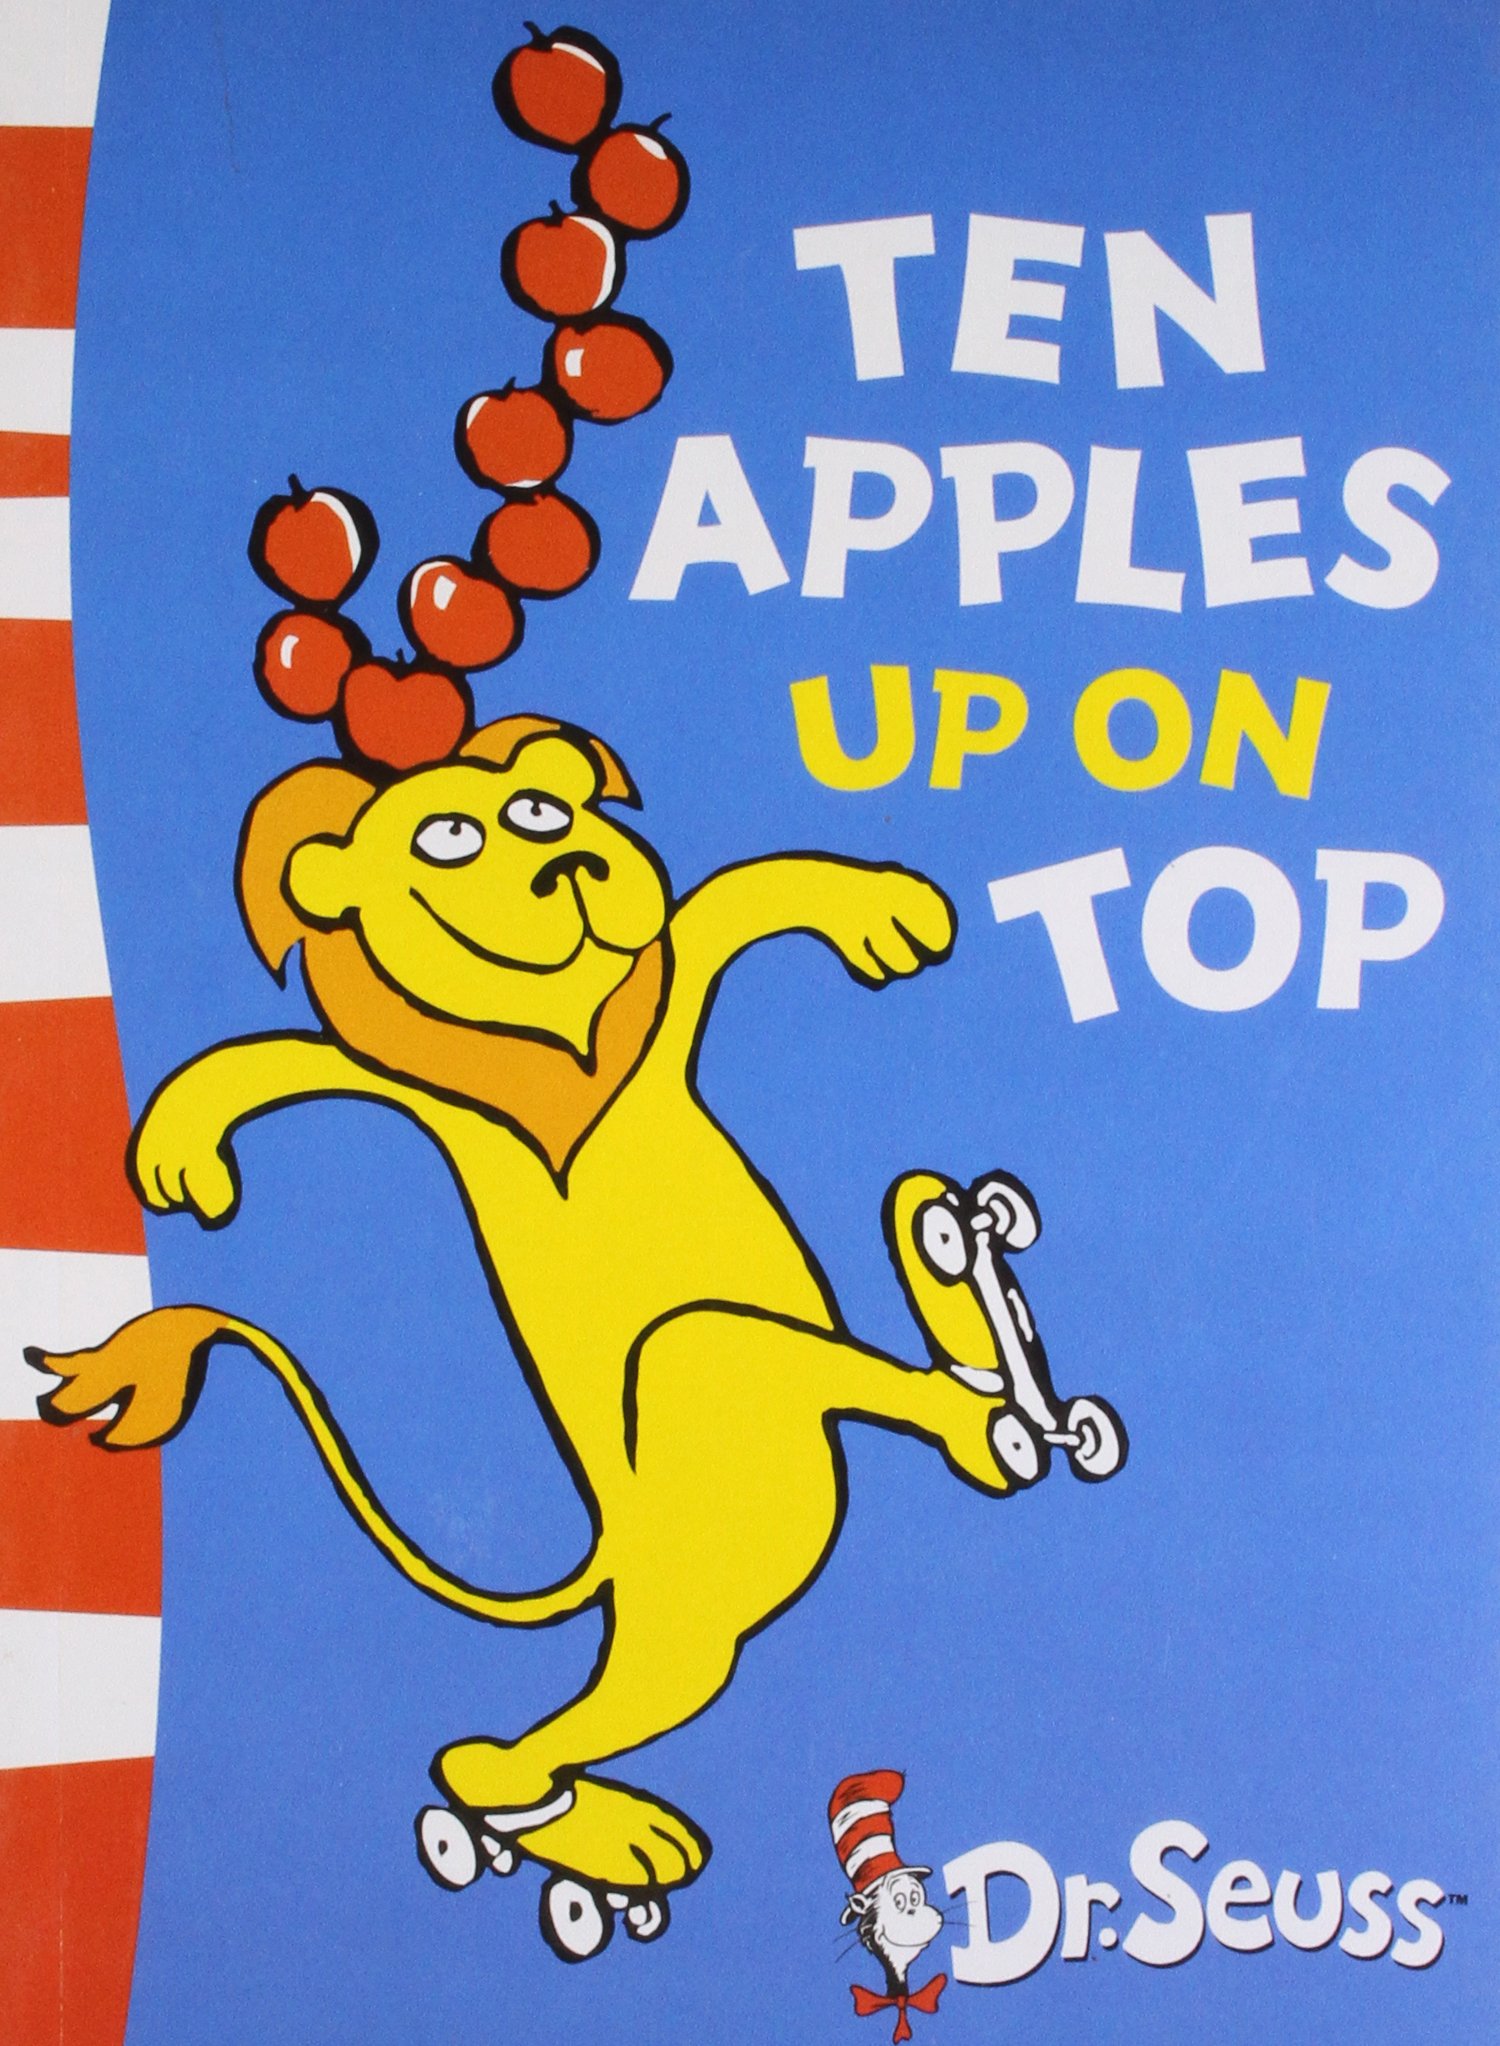 TEN APPLES UP ON TOP - Dr. Seuss